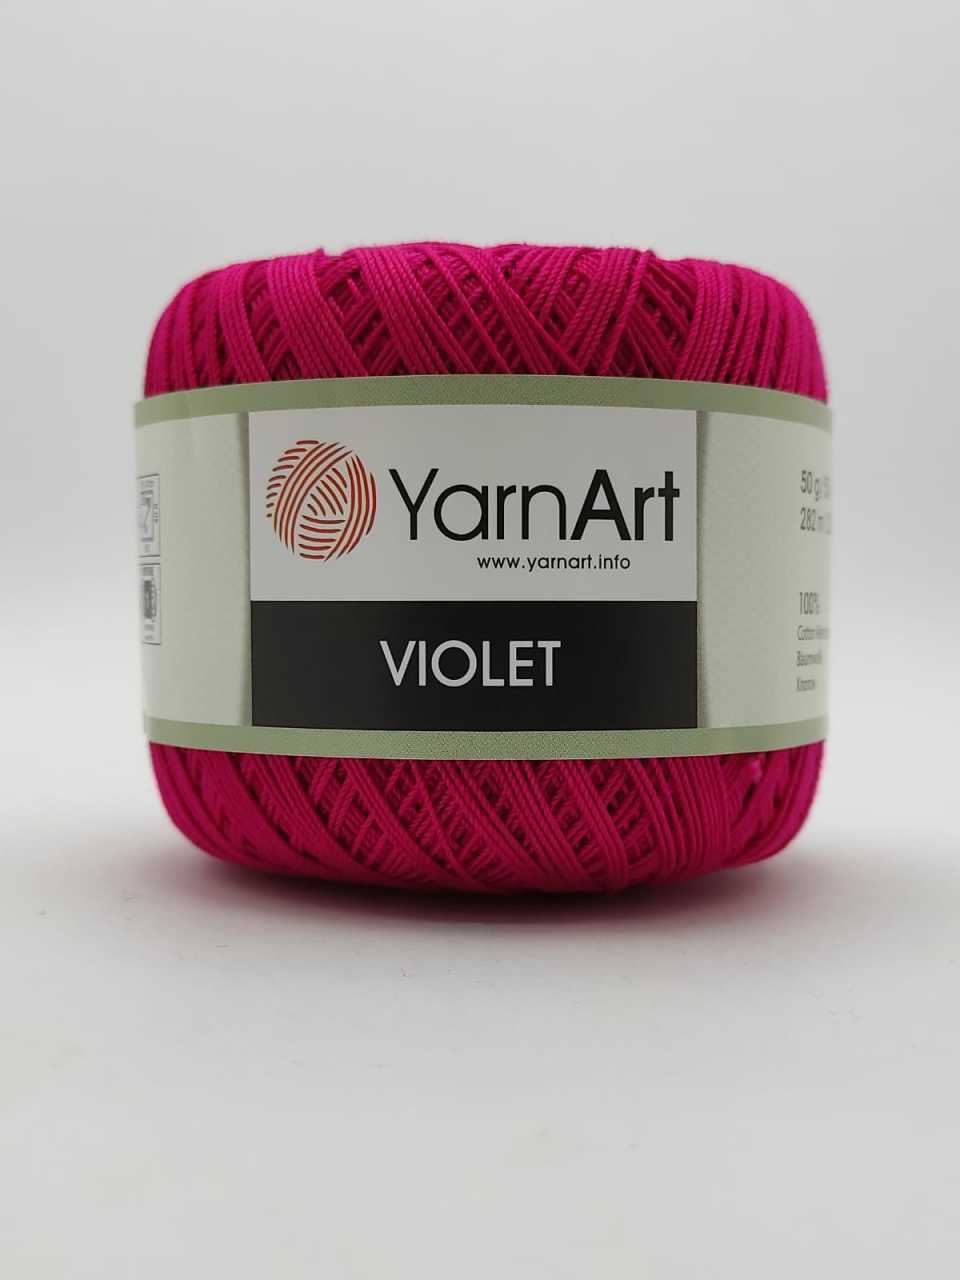 Yarnart Violet 6358